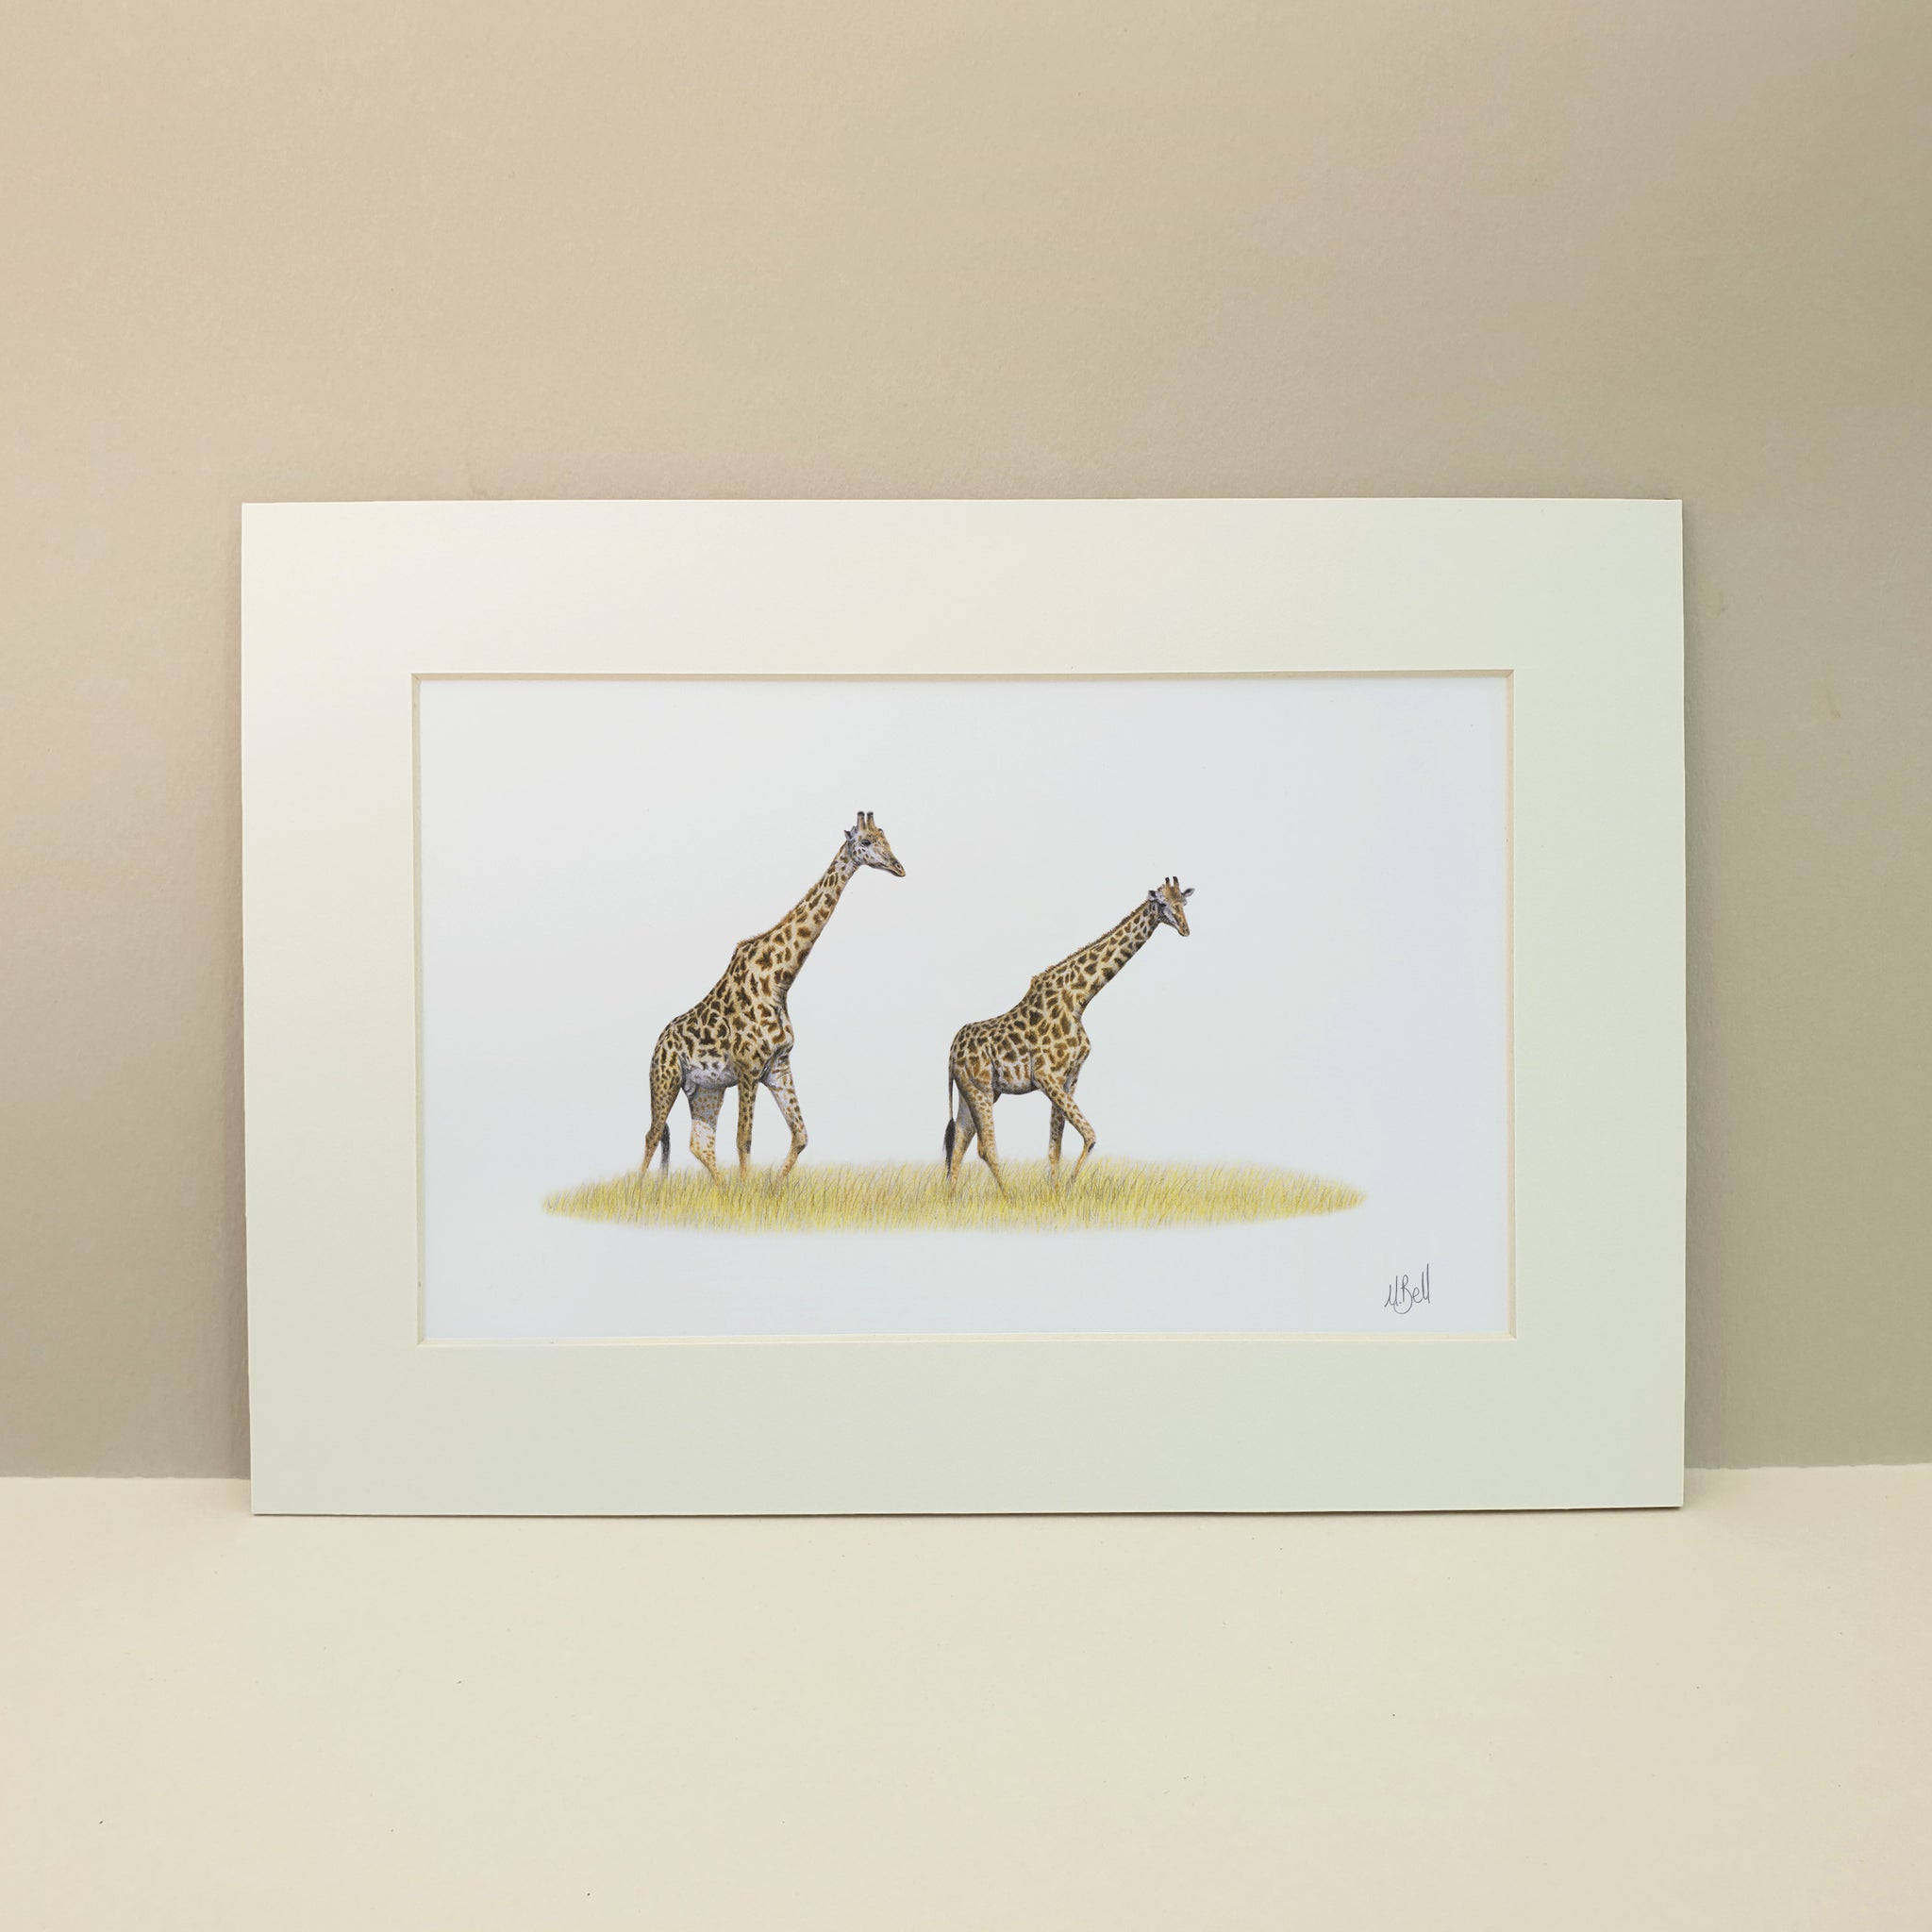 Artwork of a pair of giraffes in the Serengeti savanna by artist Matthew Bell